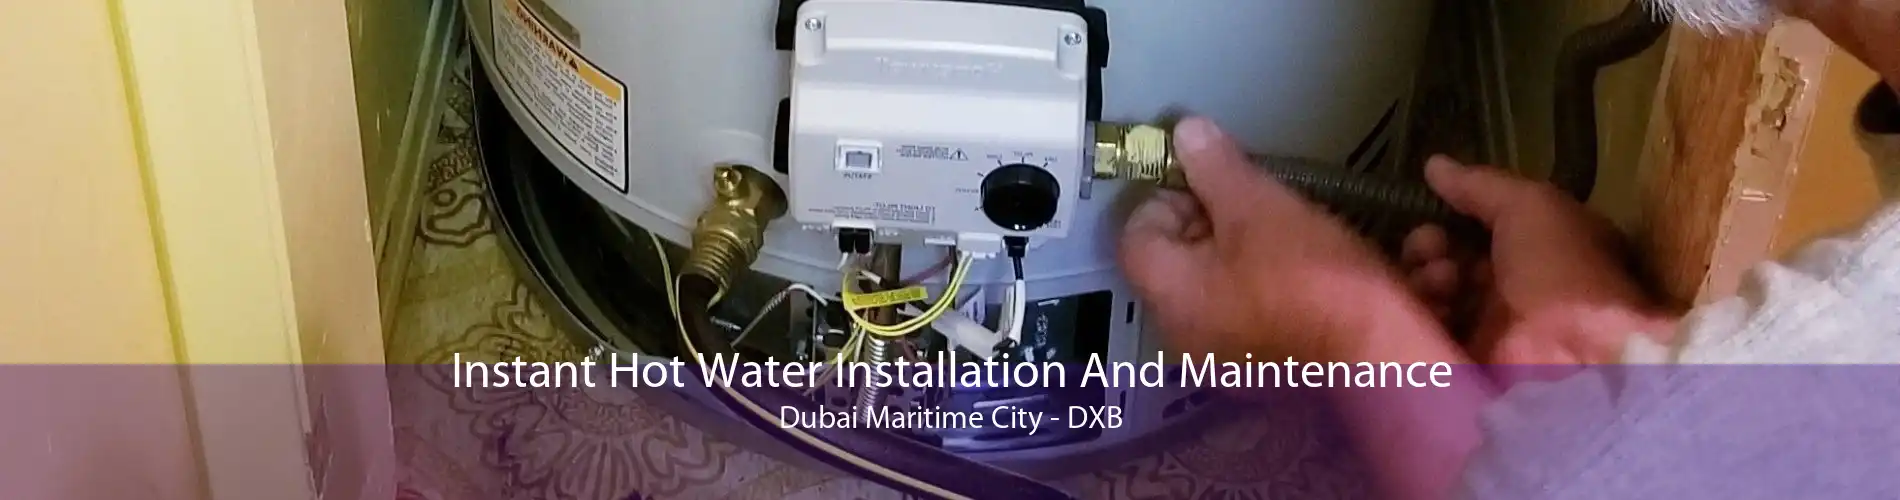 Instant Hot Water Installation And Maintenance Dubai Maritime City - DXB